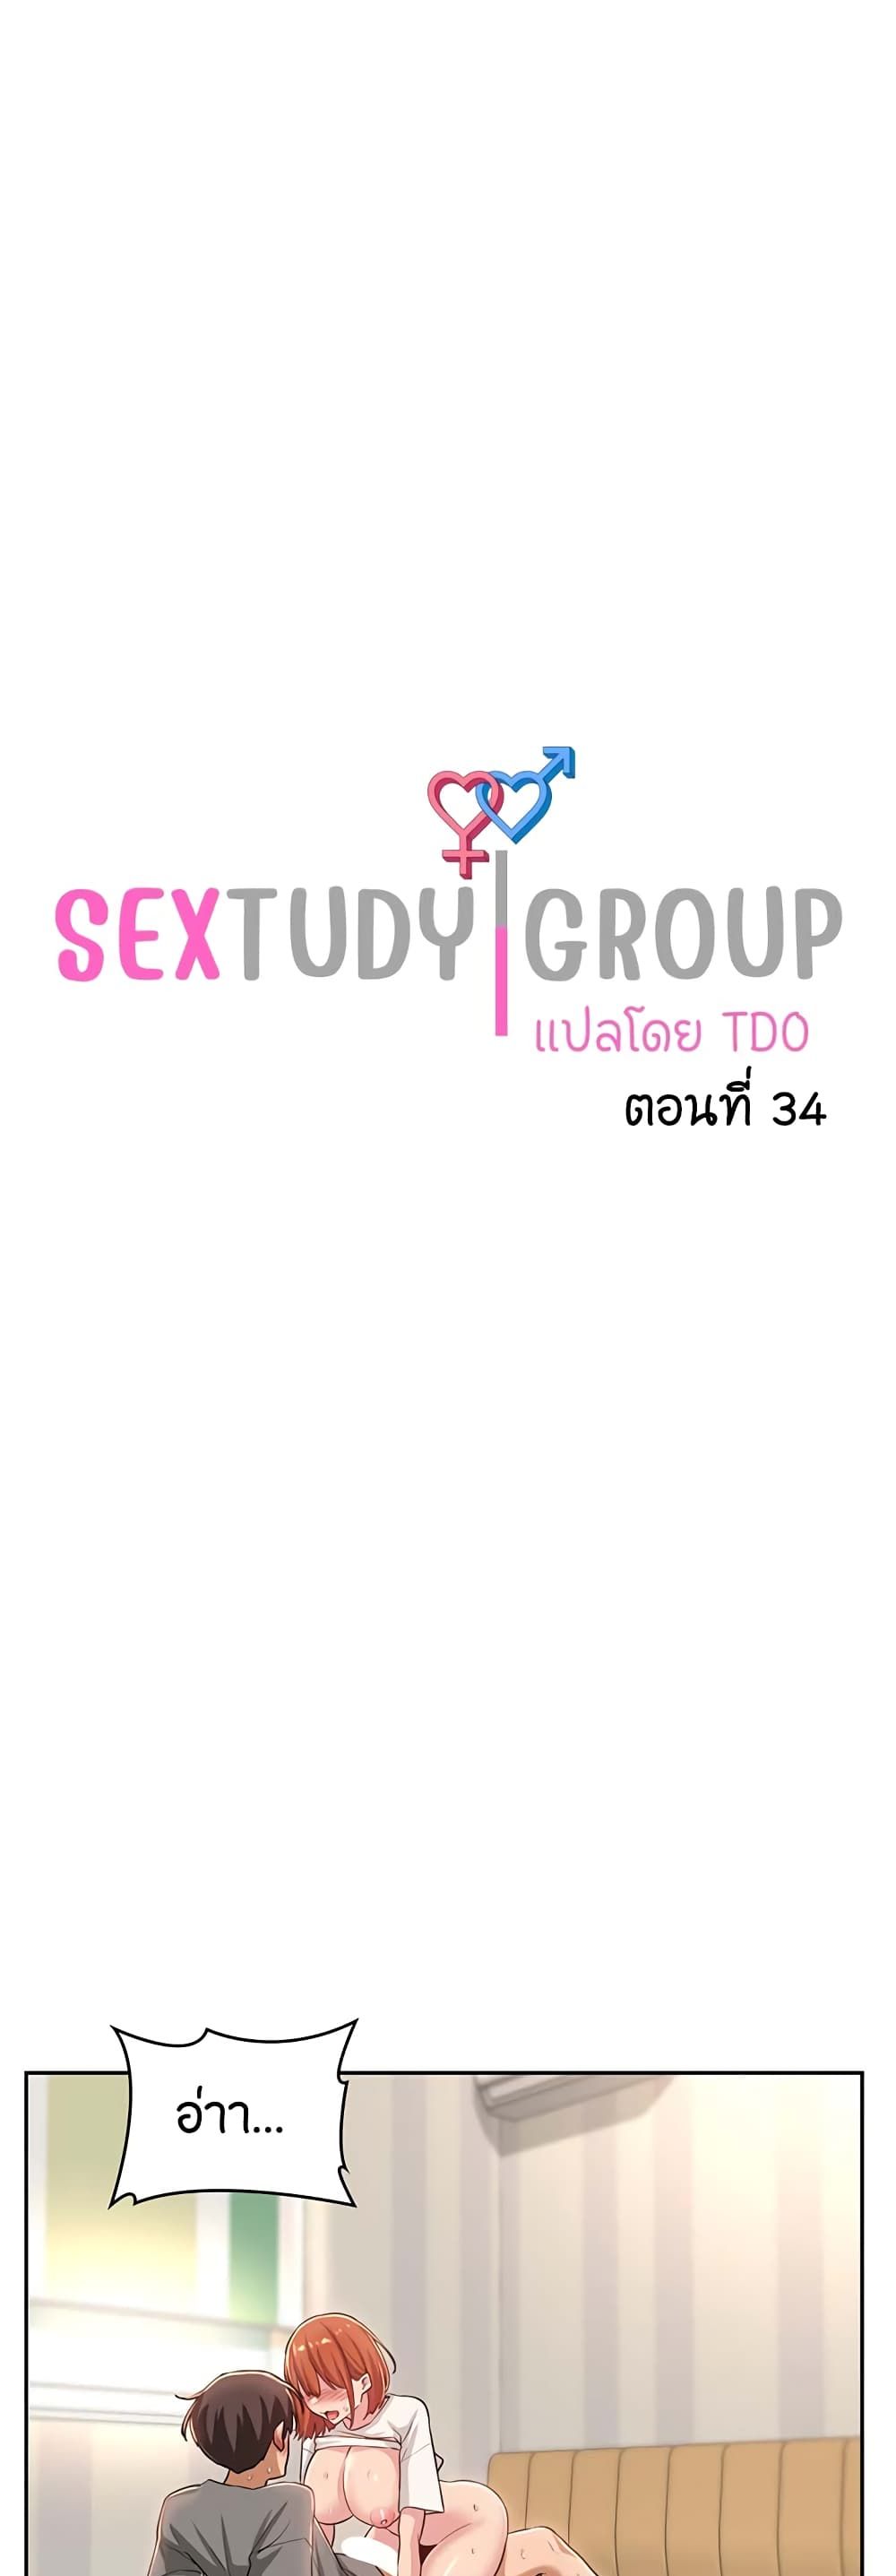 Sextudy Group 34 (1)